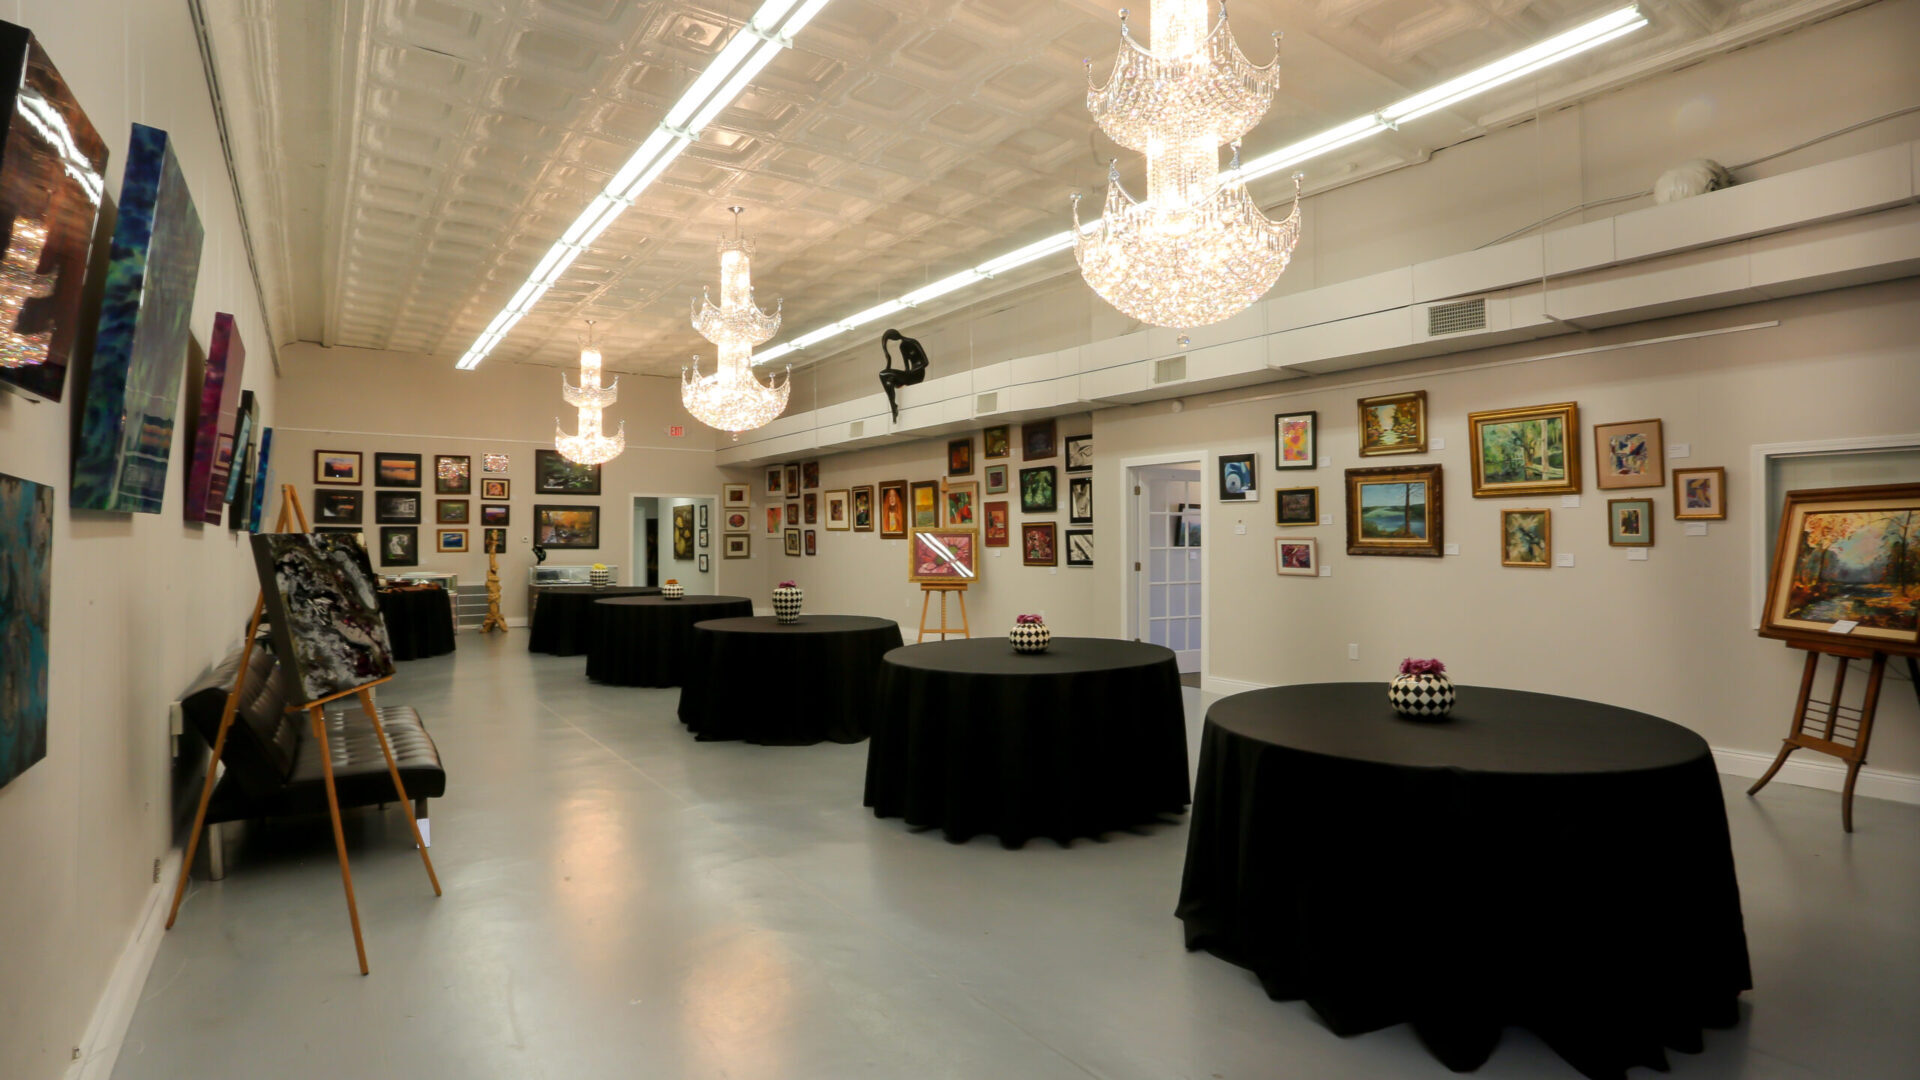 Hartley Art Gallery & Event Center Venue 3 - Herrin, Illinois